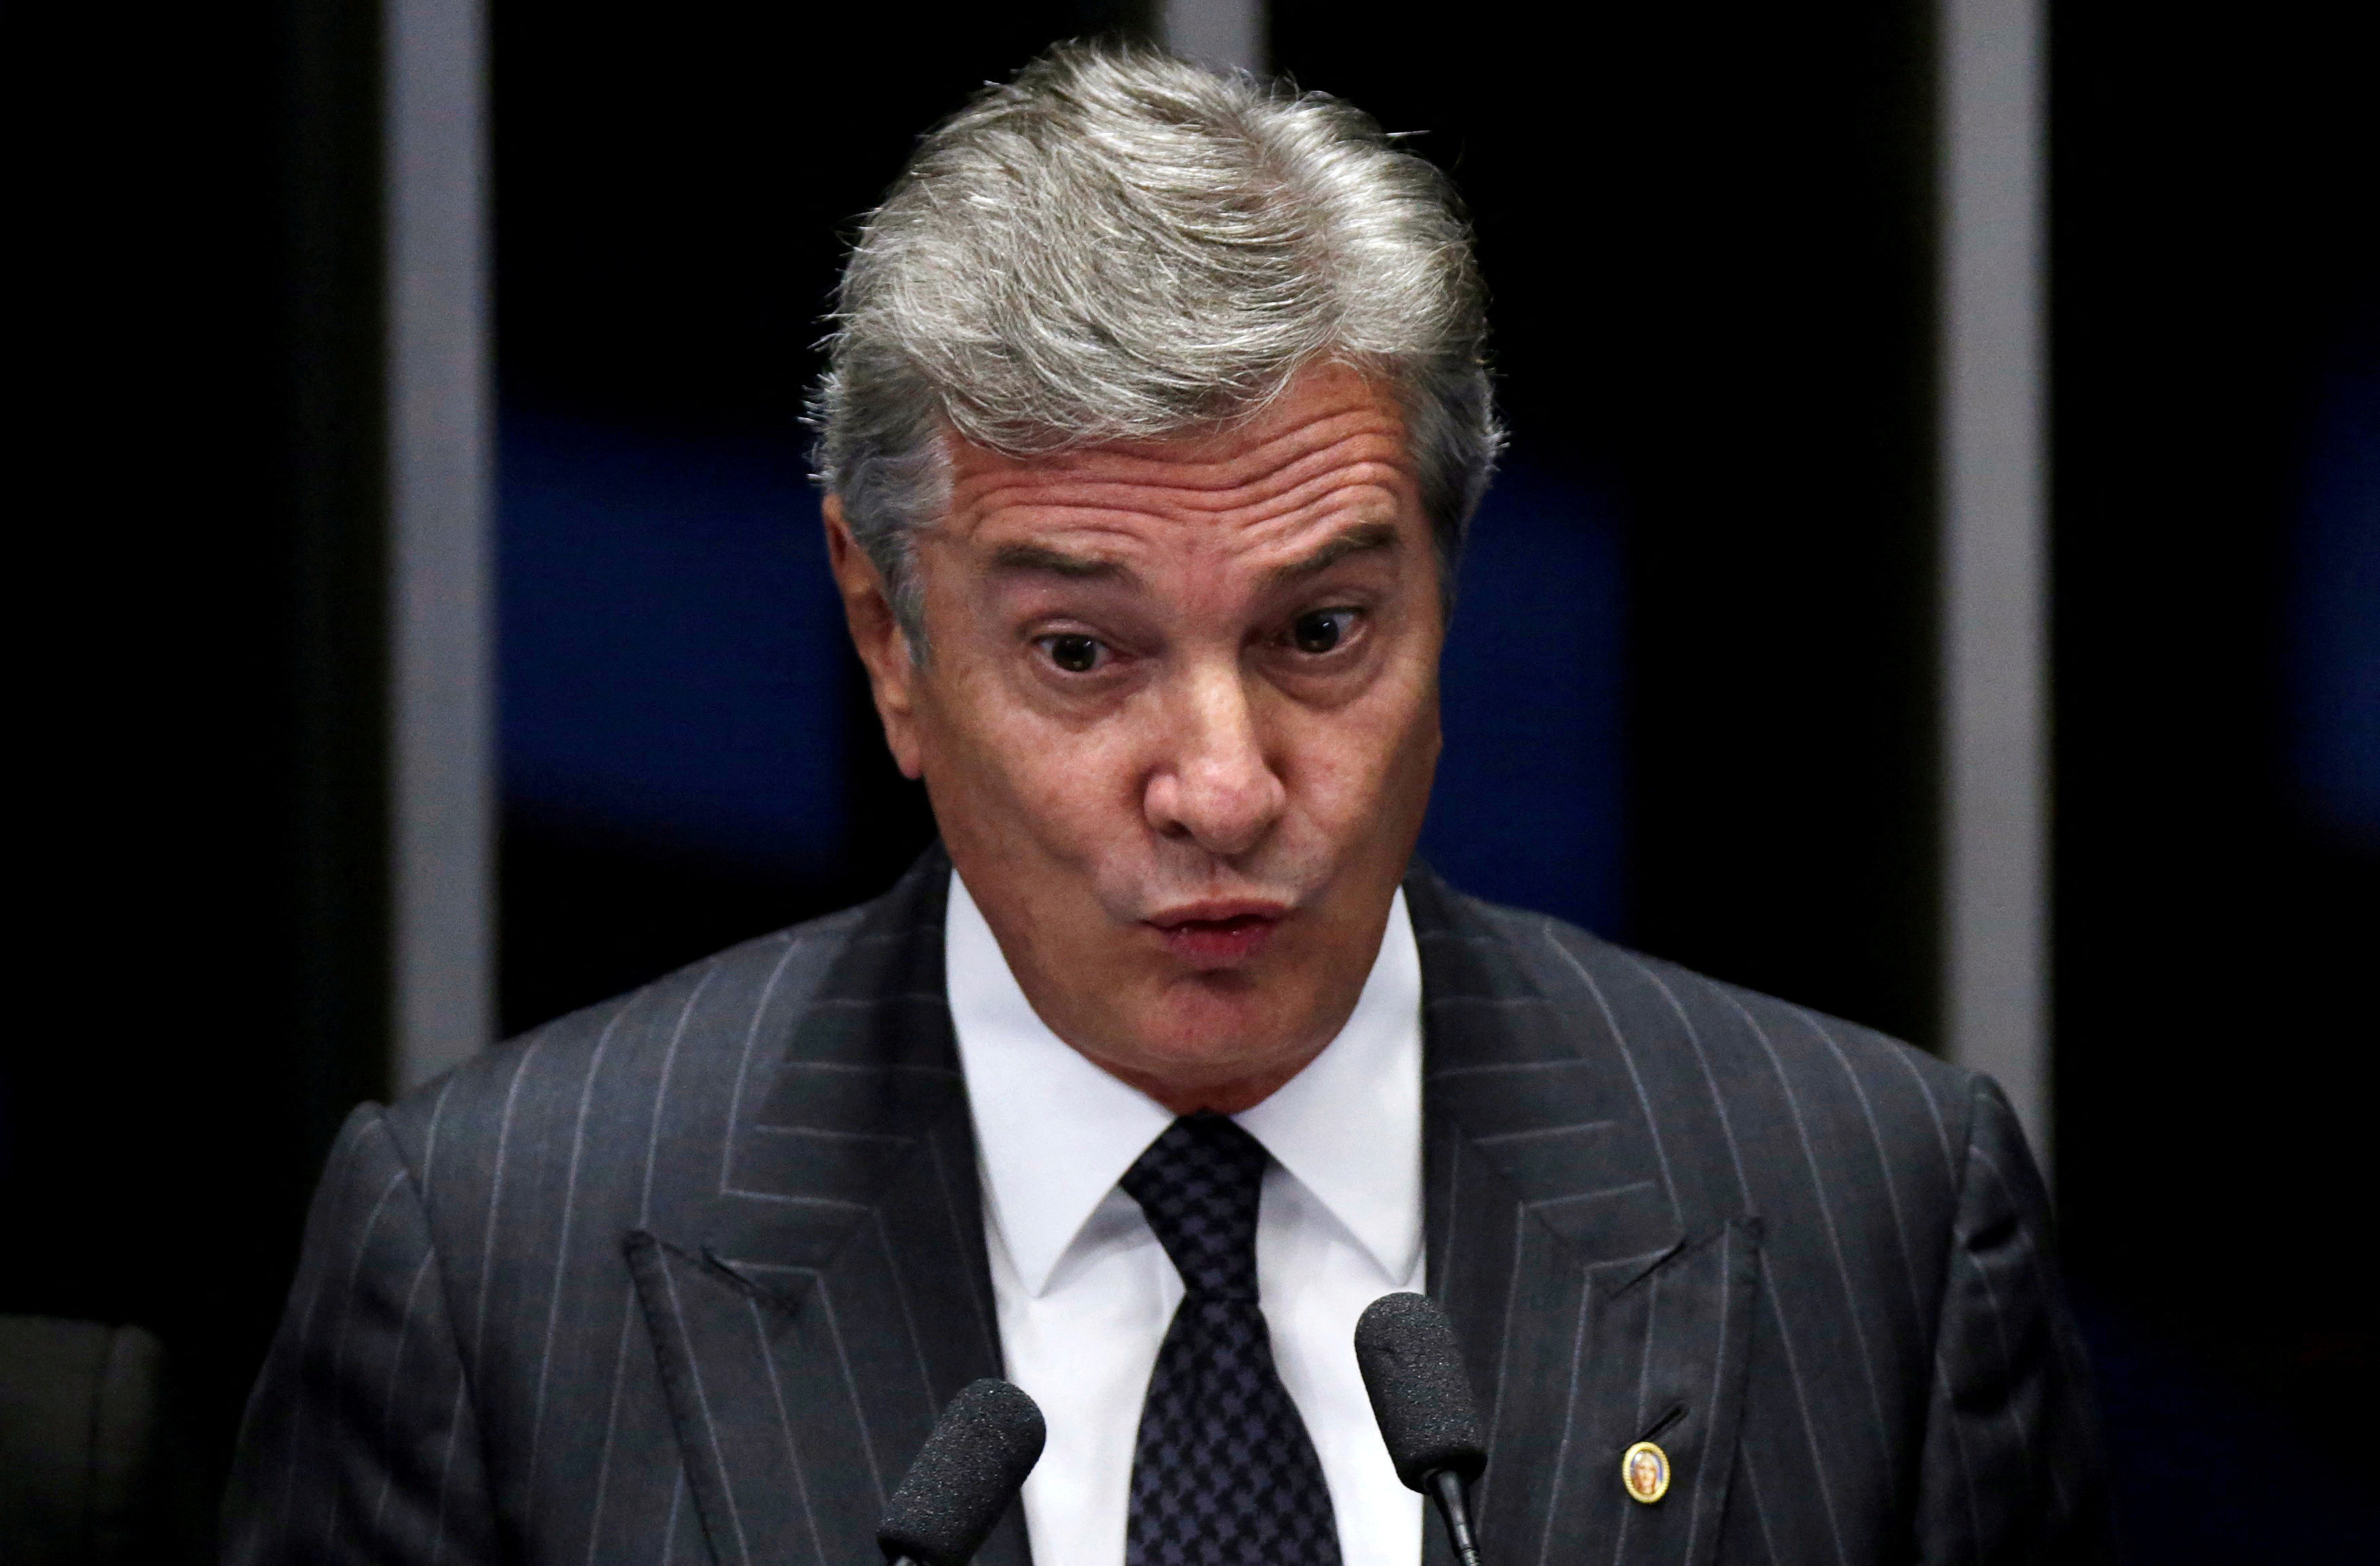 Senator Collor de Mello speaks during a vote session on the impeachment of President Dilma Rousseff in Brasilia